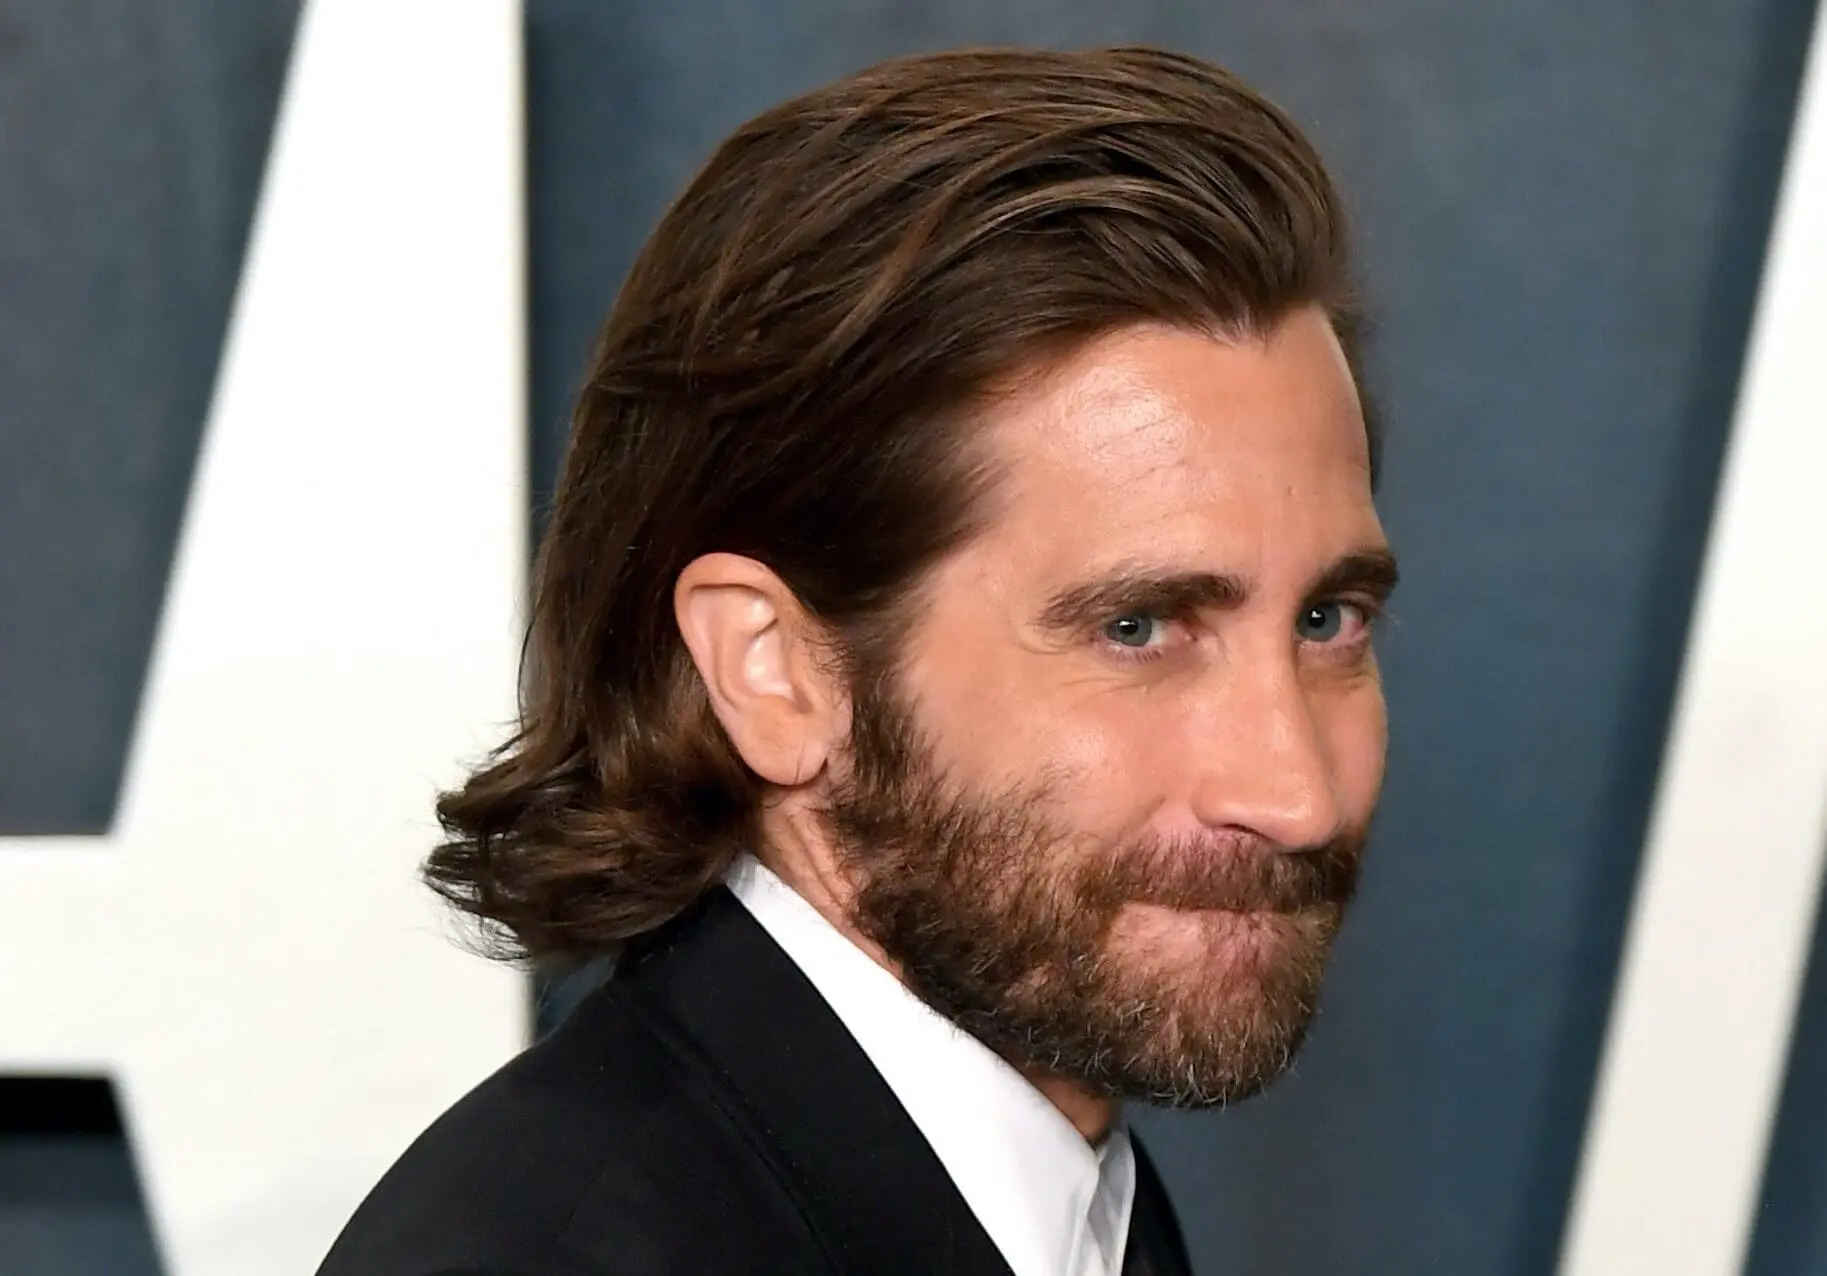 Jake Gyllenhaal capelli lunghi uomo 2021